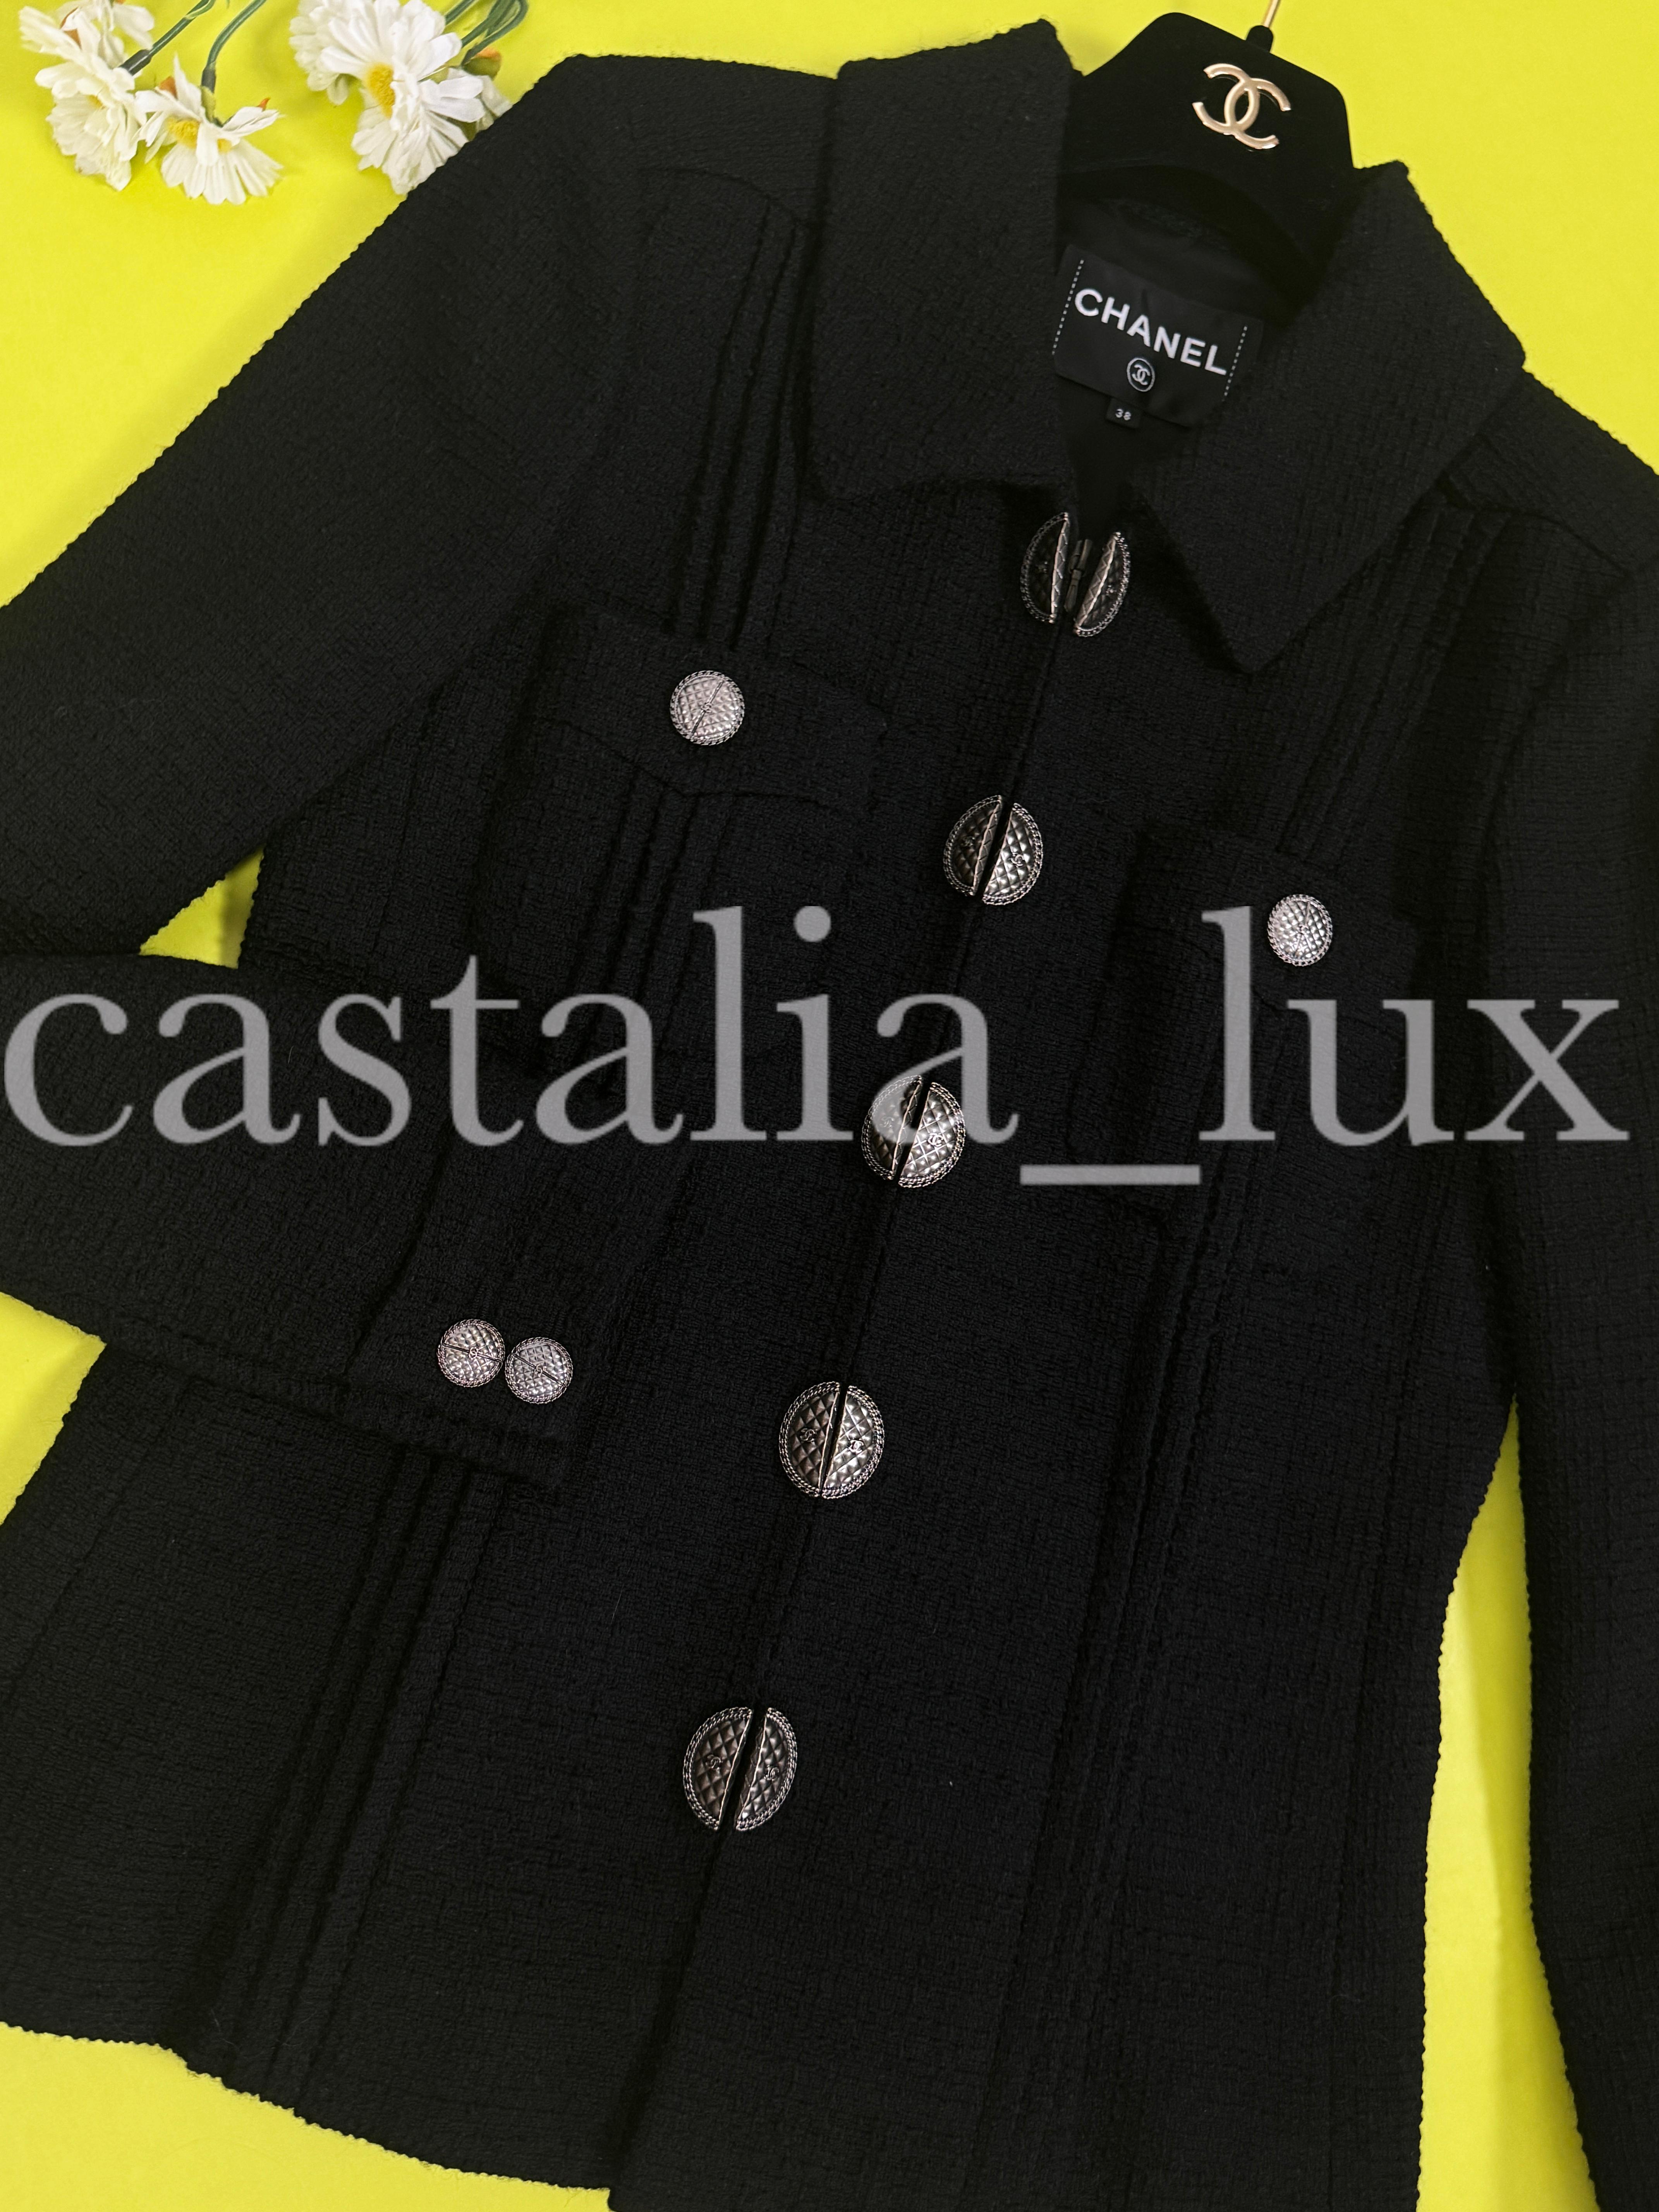 Chanel New Paris / Cuba Black Tweed Jacket  For Sale 7